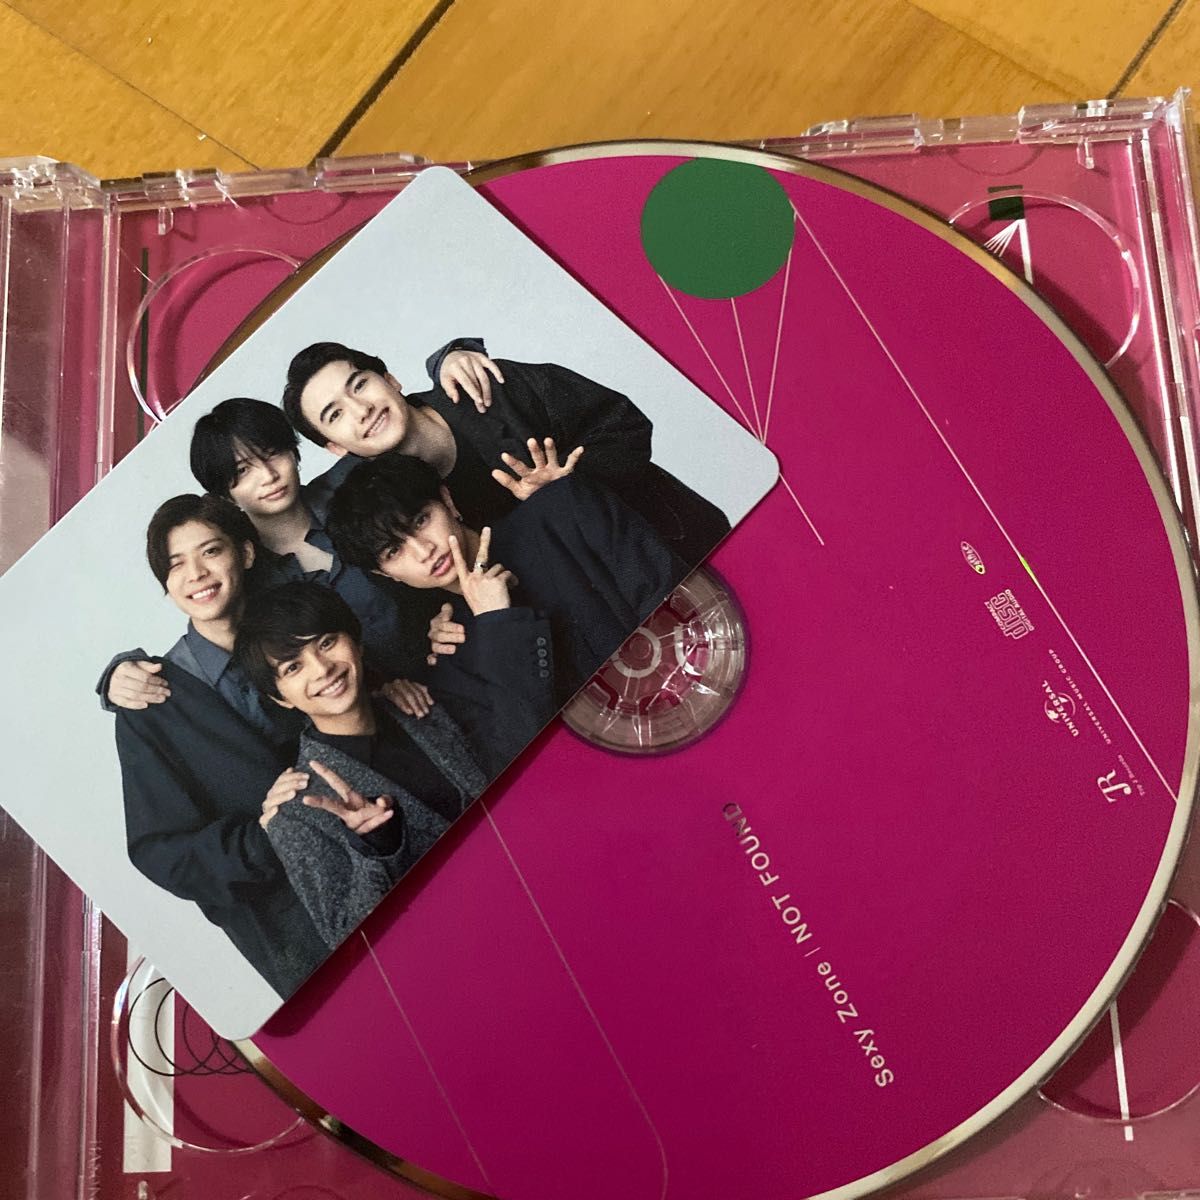 NOT FOUND 初回限定盤A DVD付 CD Sexy Zone 倉庫S